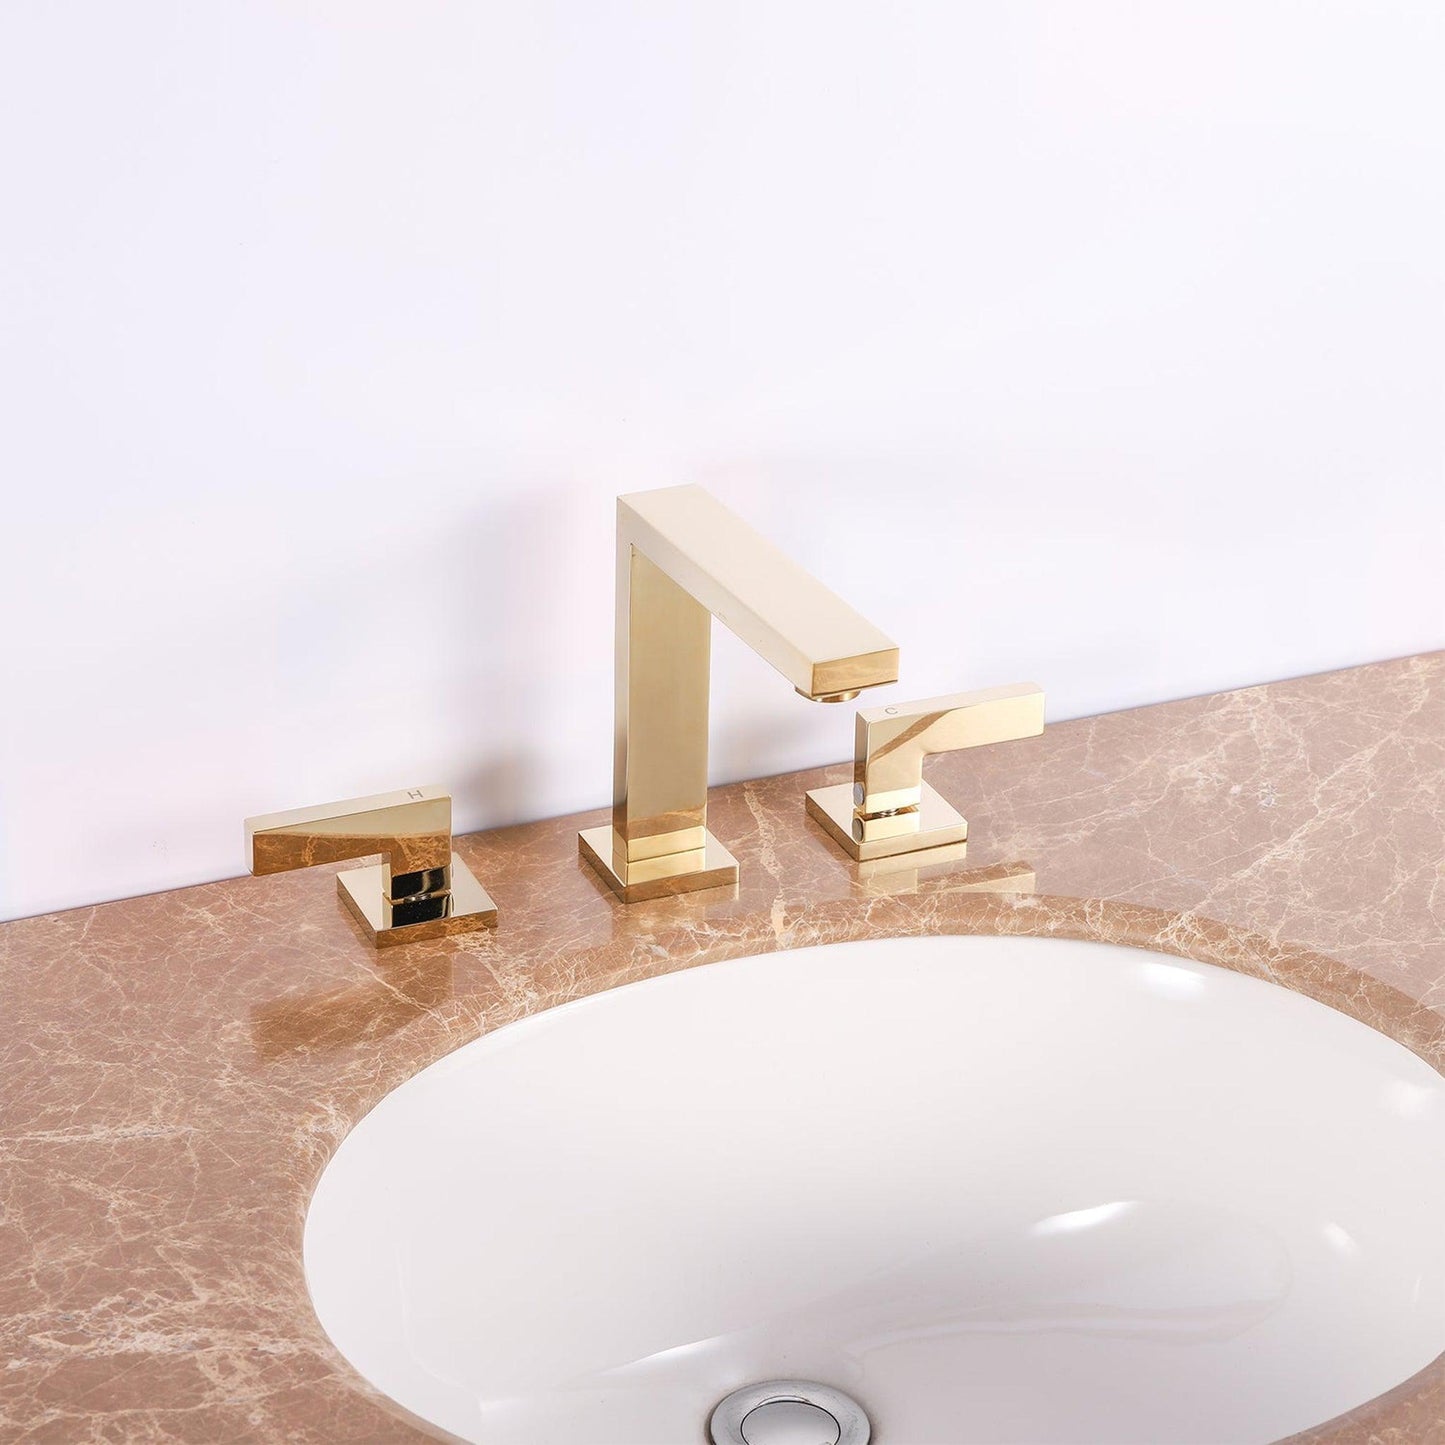 Eviva Sleek Gold Coated Widespread Bathroom Sink Faucet